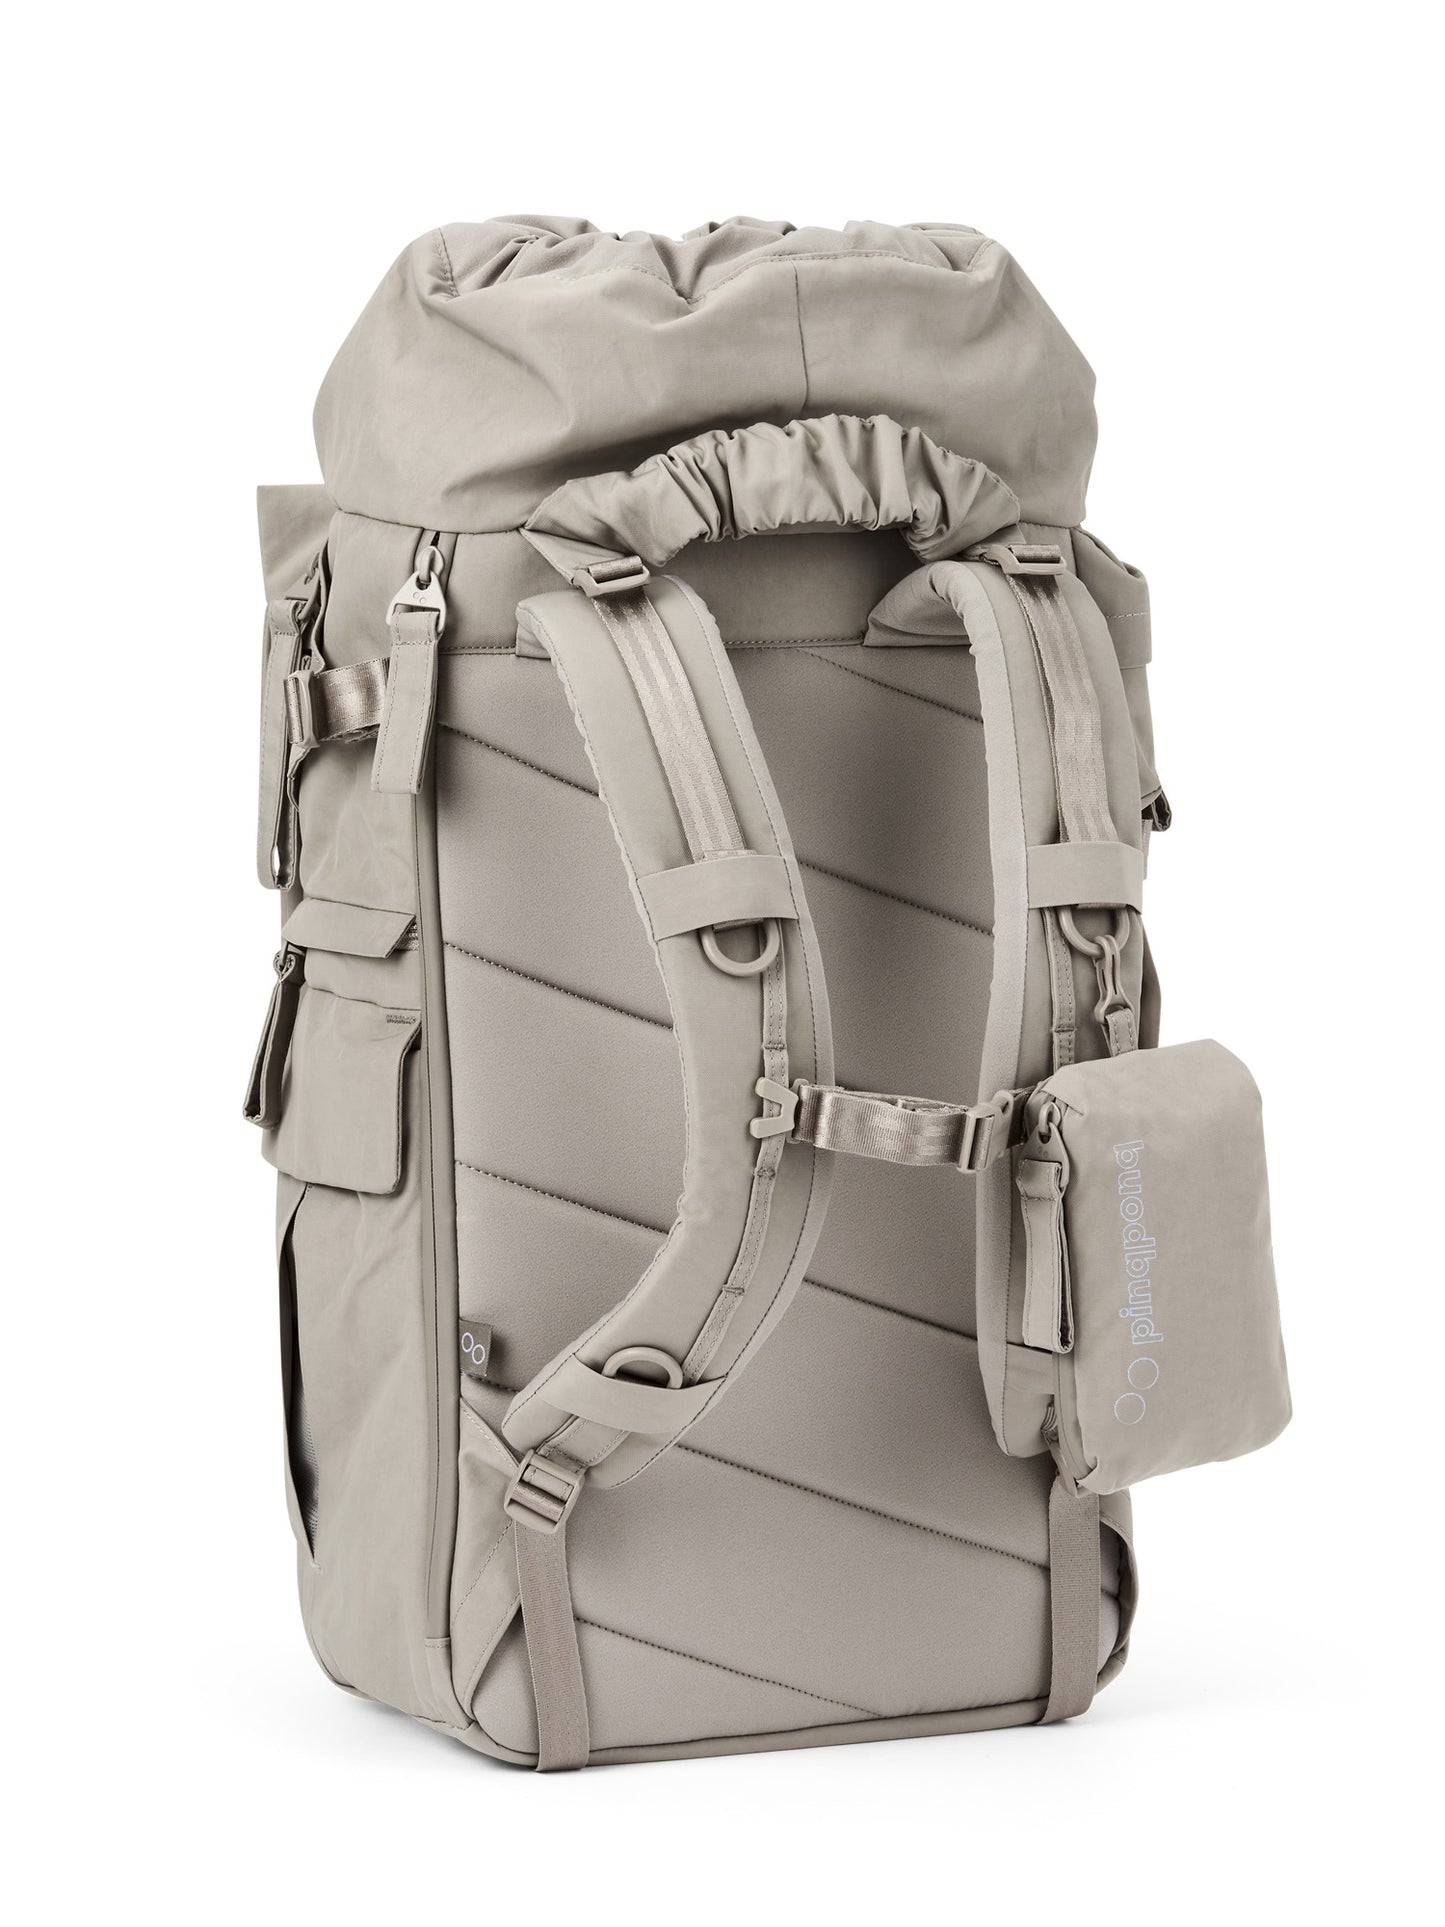 pinqponq-backpack-Blok-Large-Crinkle-Taupe-back